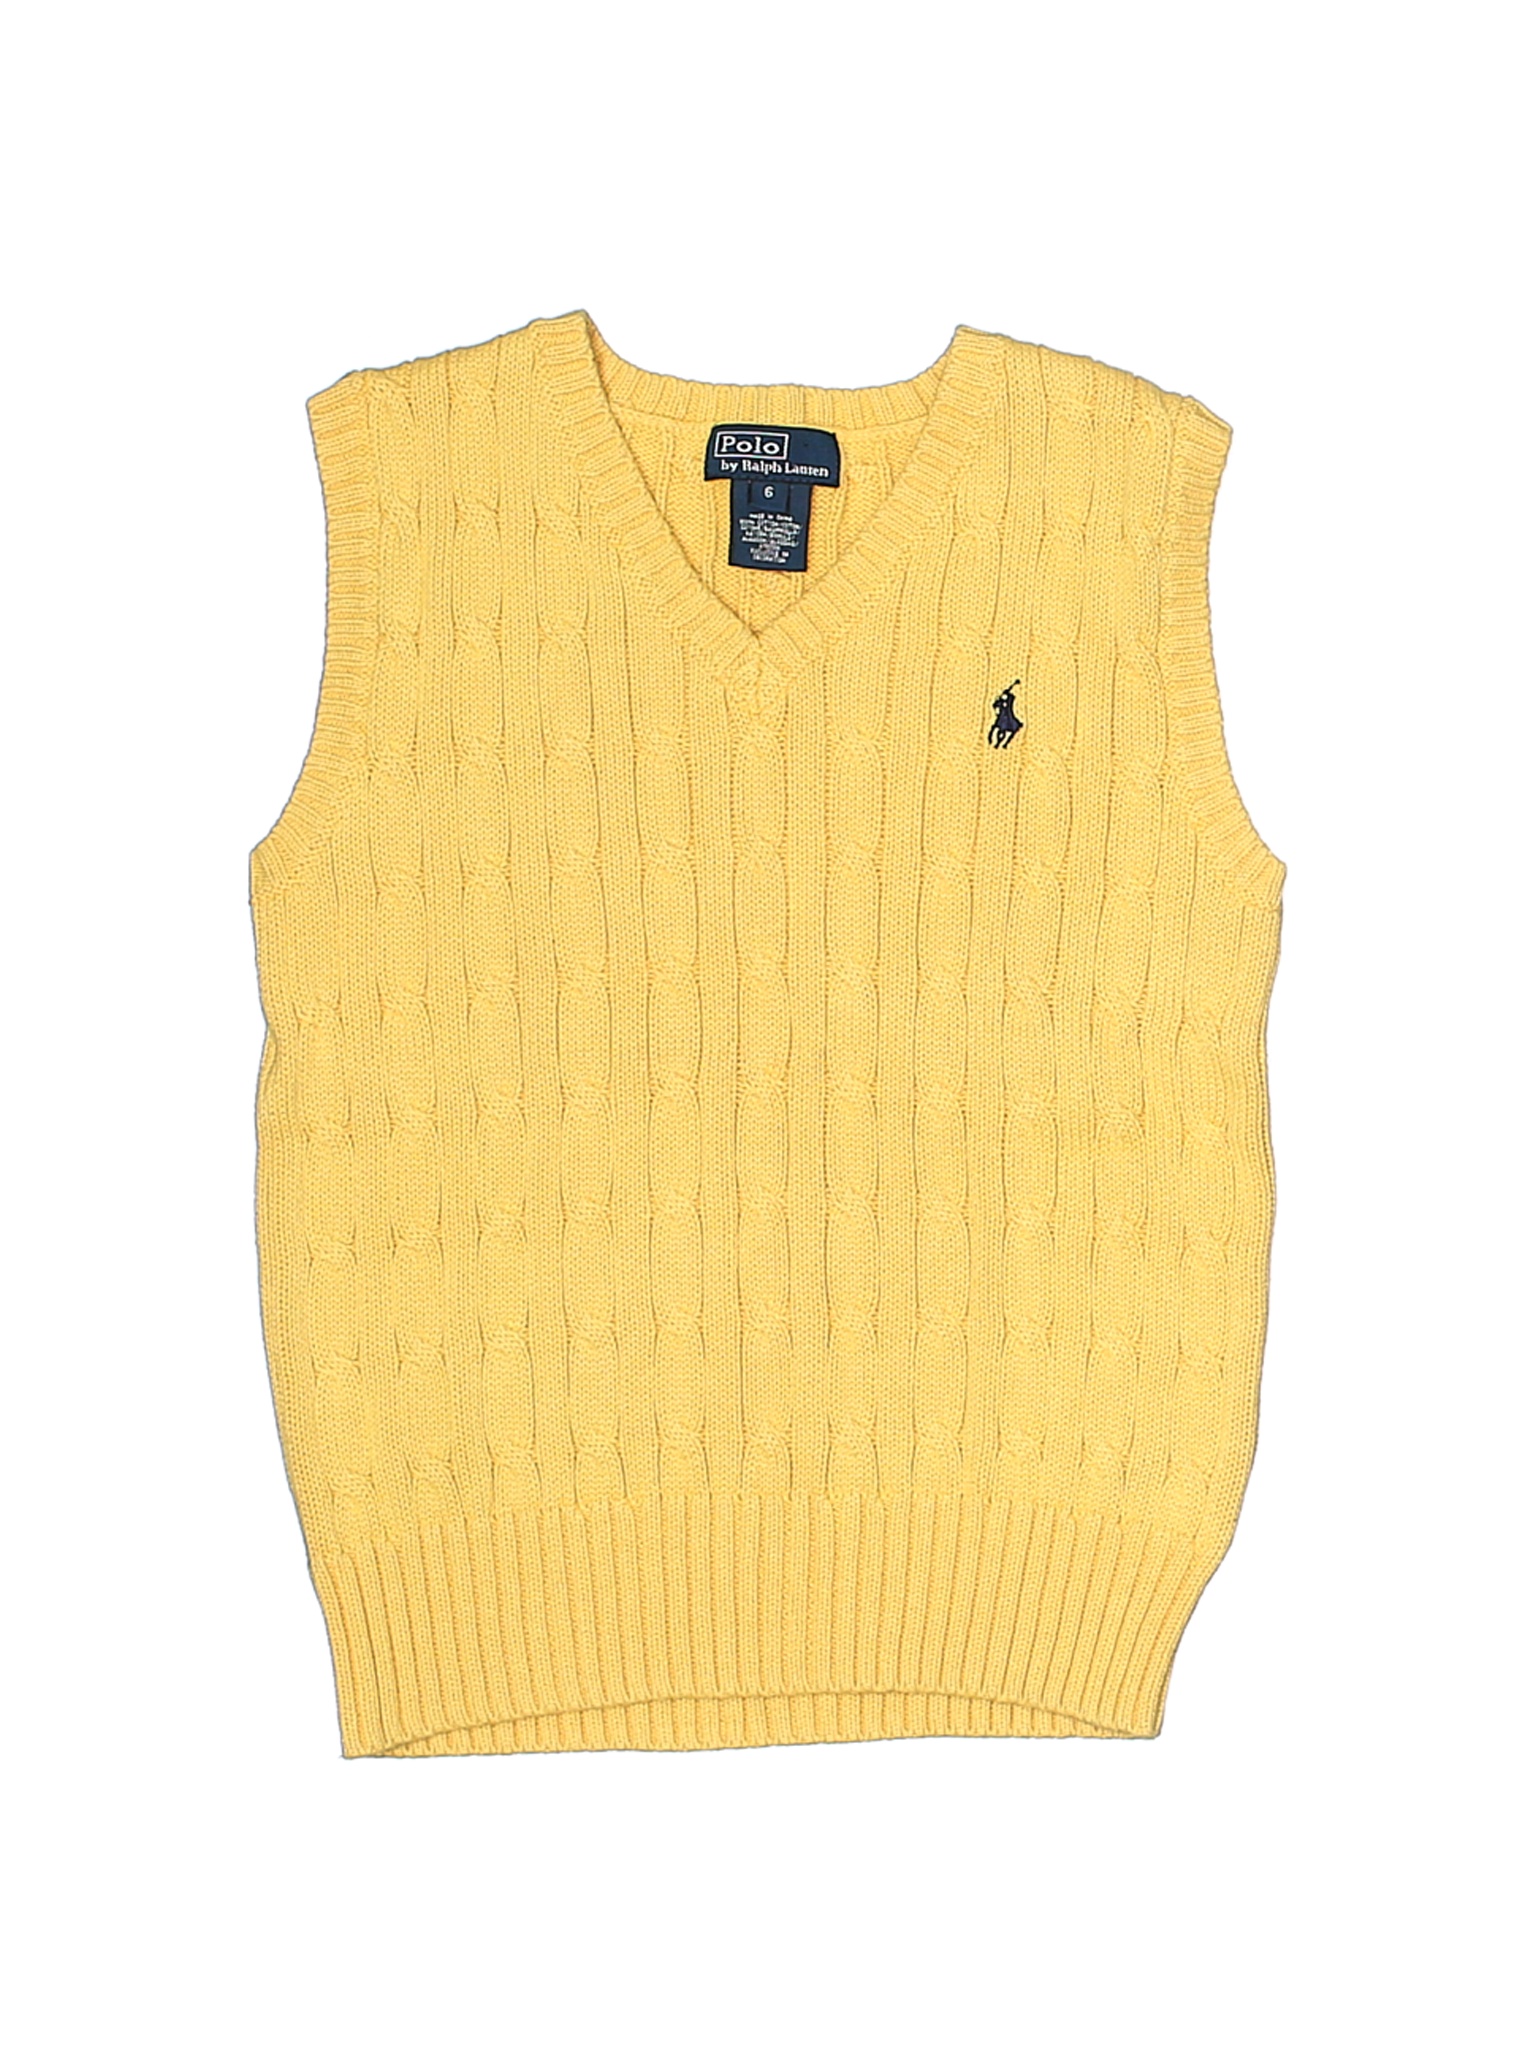 Polo by Ralph Lauren Boys Yellow Sweater Vest 6 | eBay